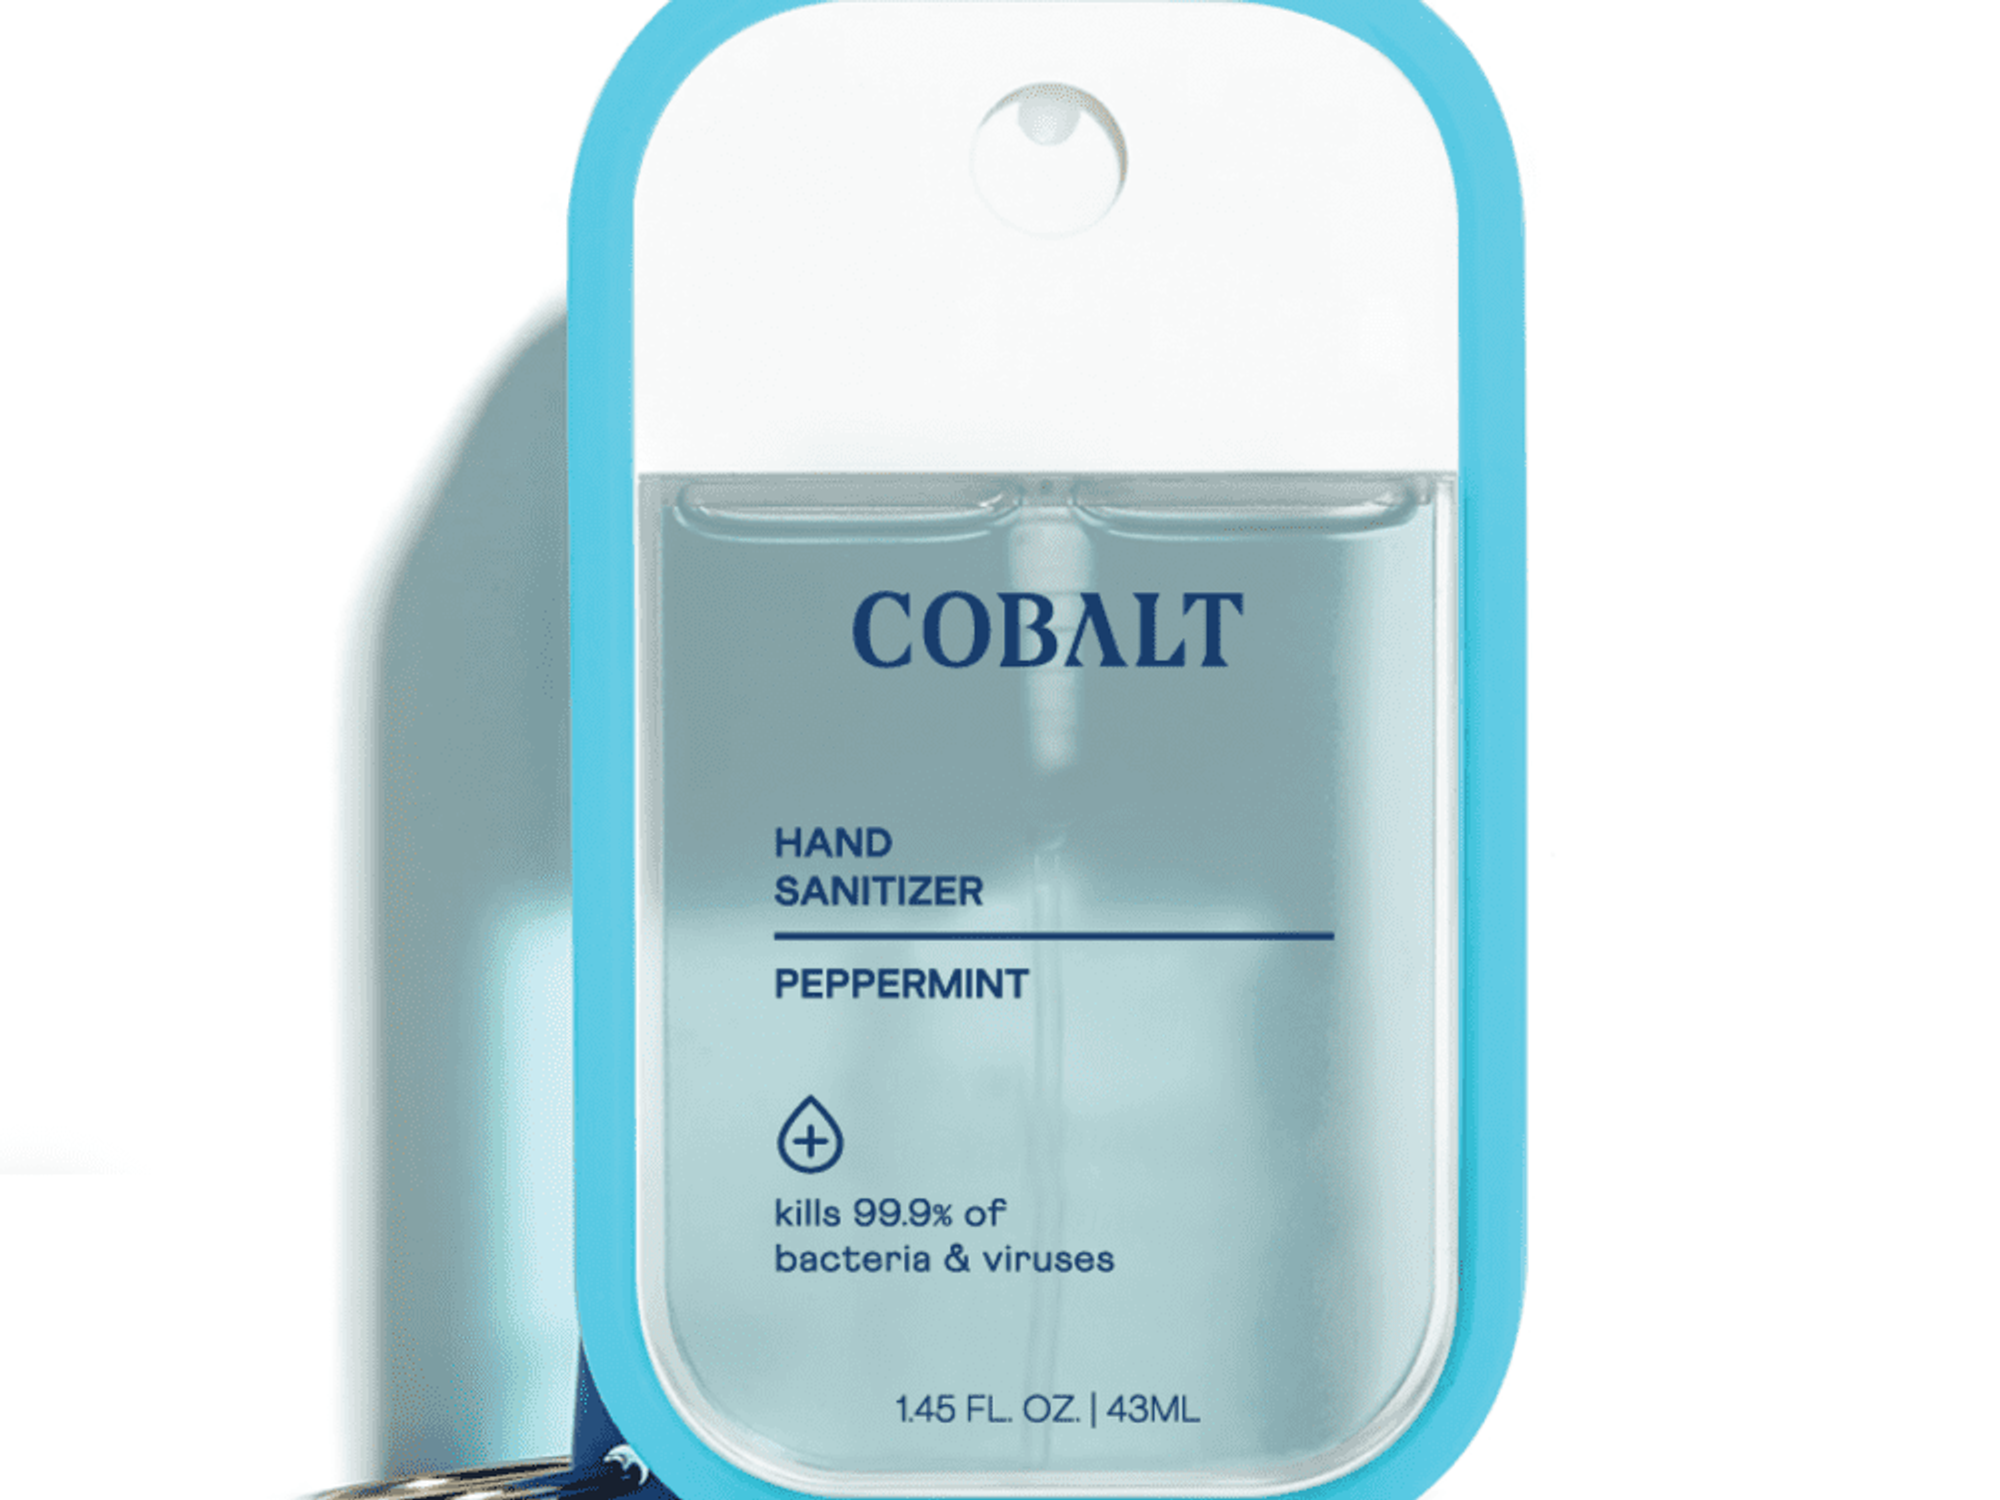 Cobalt hand sanitizer Peppermint clip-on